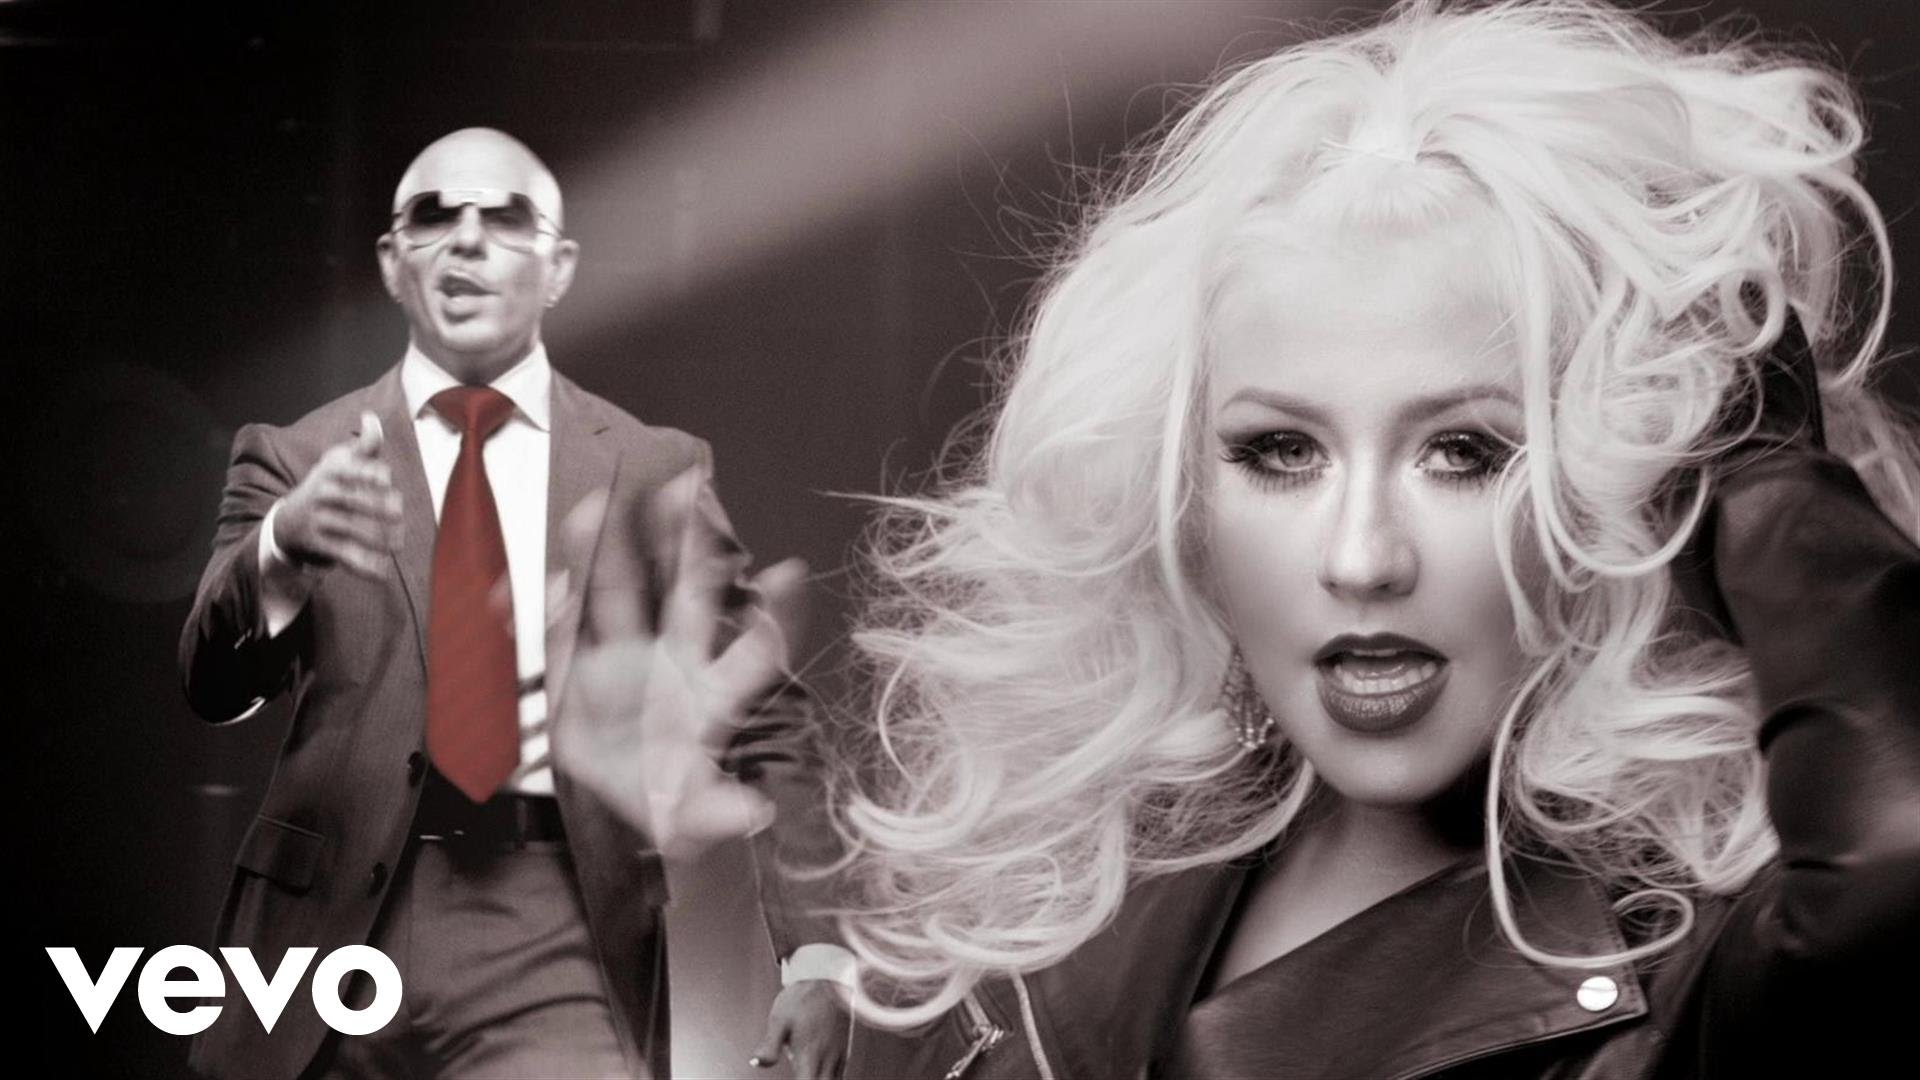 Pitbull - Feel This Moment ft. Christina Aguilera - YouTube